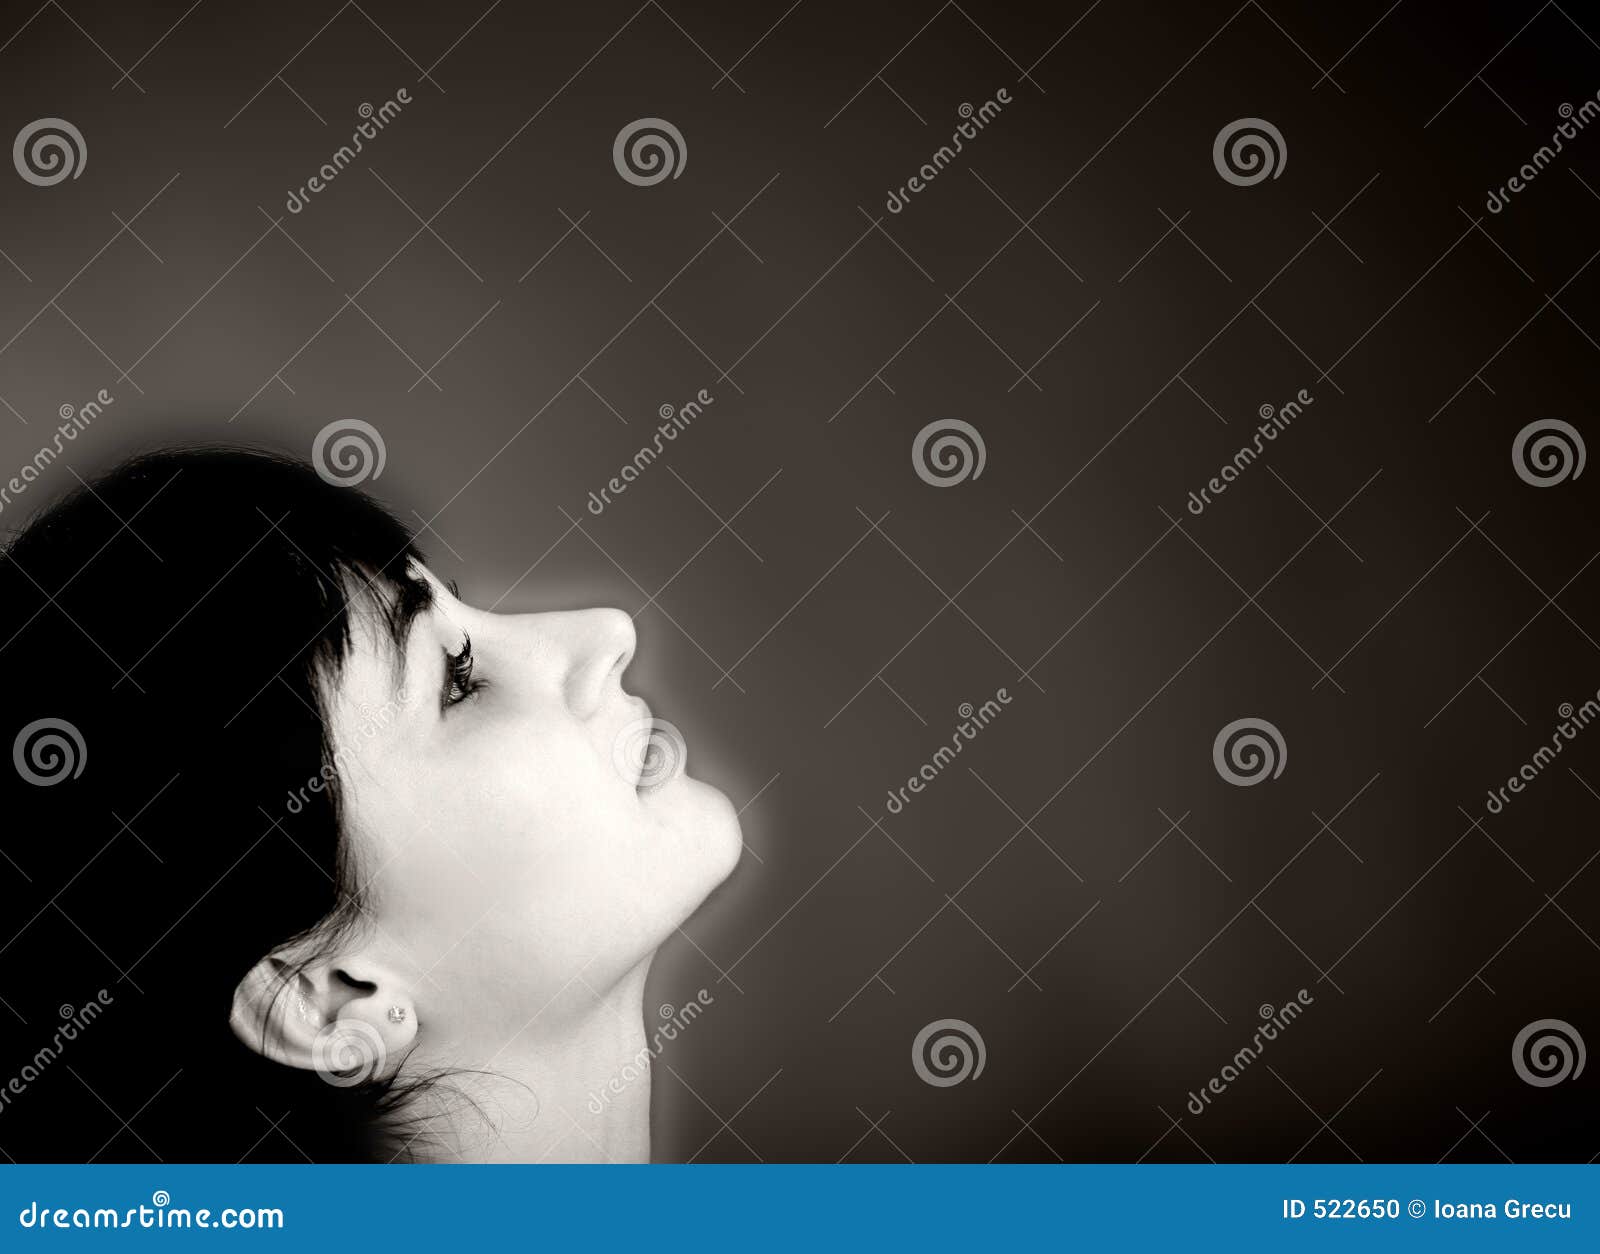 Woman dreaming away stock photo. Image of dark, white, dreaming - 522650